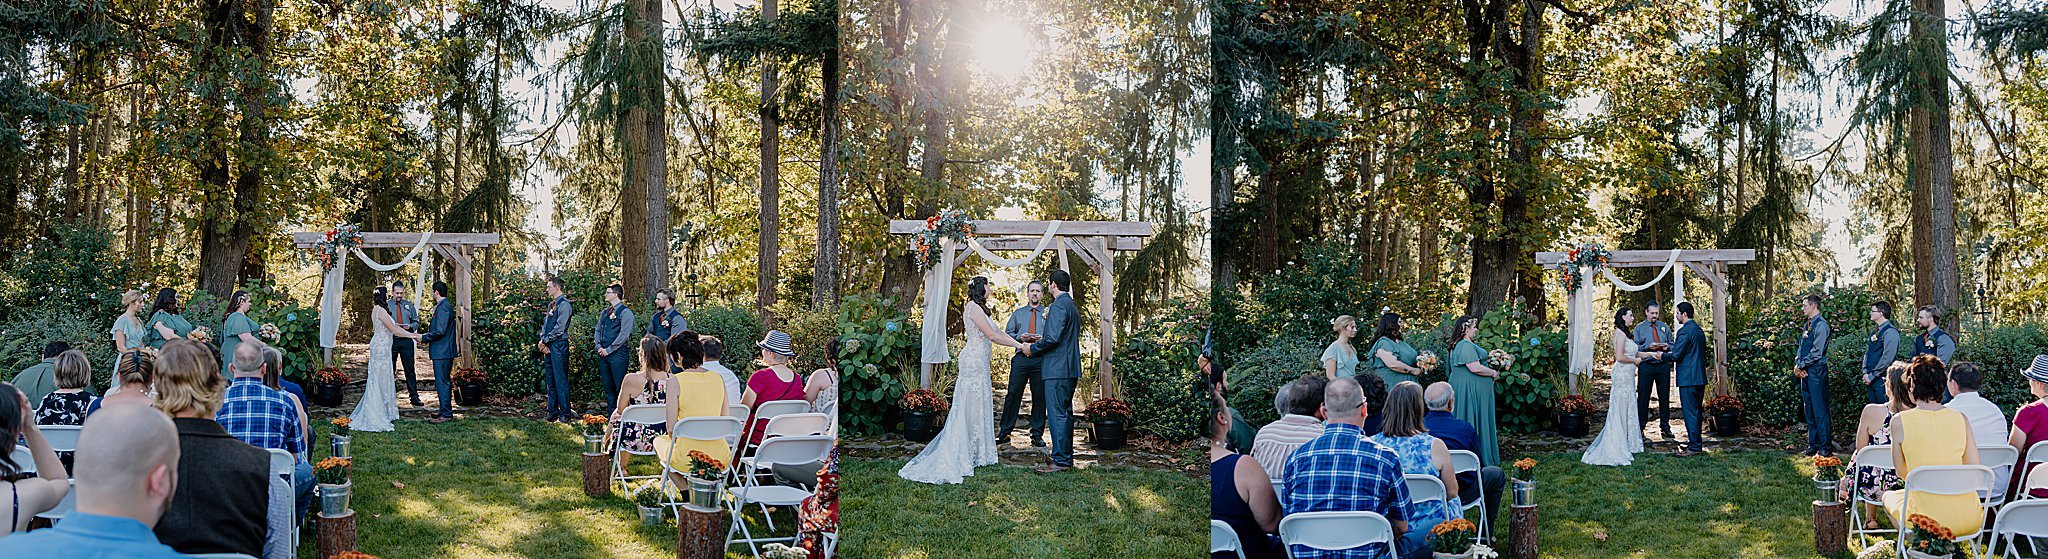 withstylePhotography_Oregon city Photographer_ Portland wedding photographer_Vanderbeck vally farms wedding_Oregon elopment Photographer0034.jpg